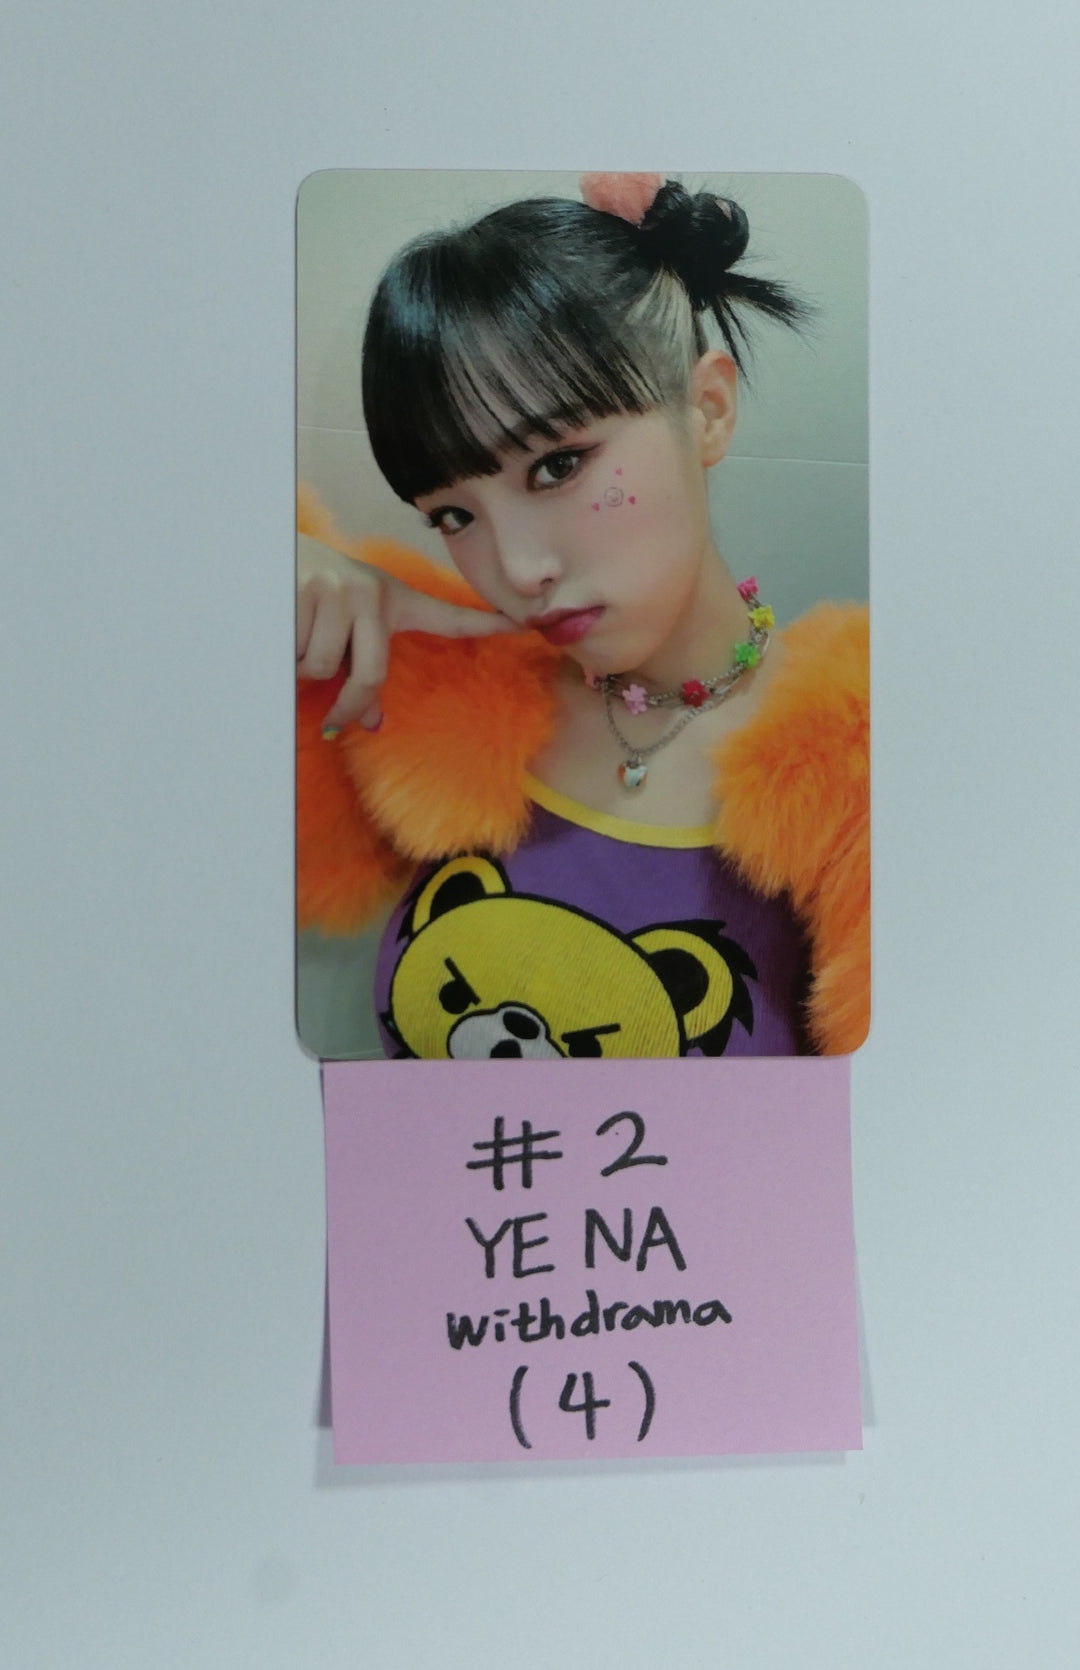 YENA "ˣ‿ˣ (SMiLEY)" - Withdrama Offline Fansign Event Photocard